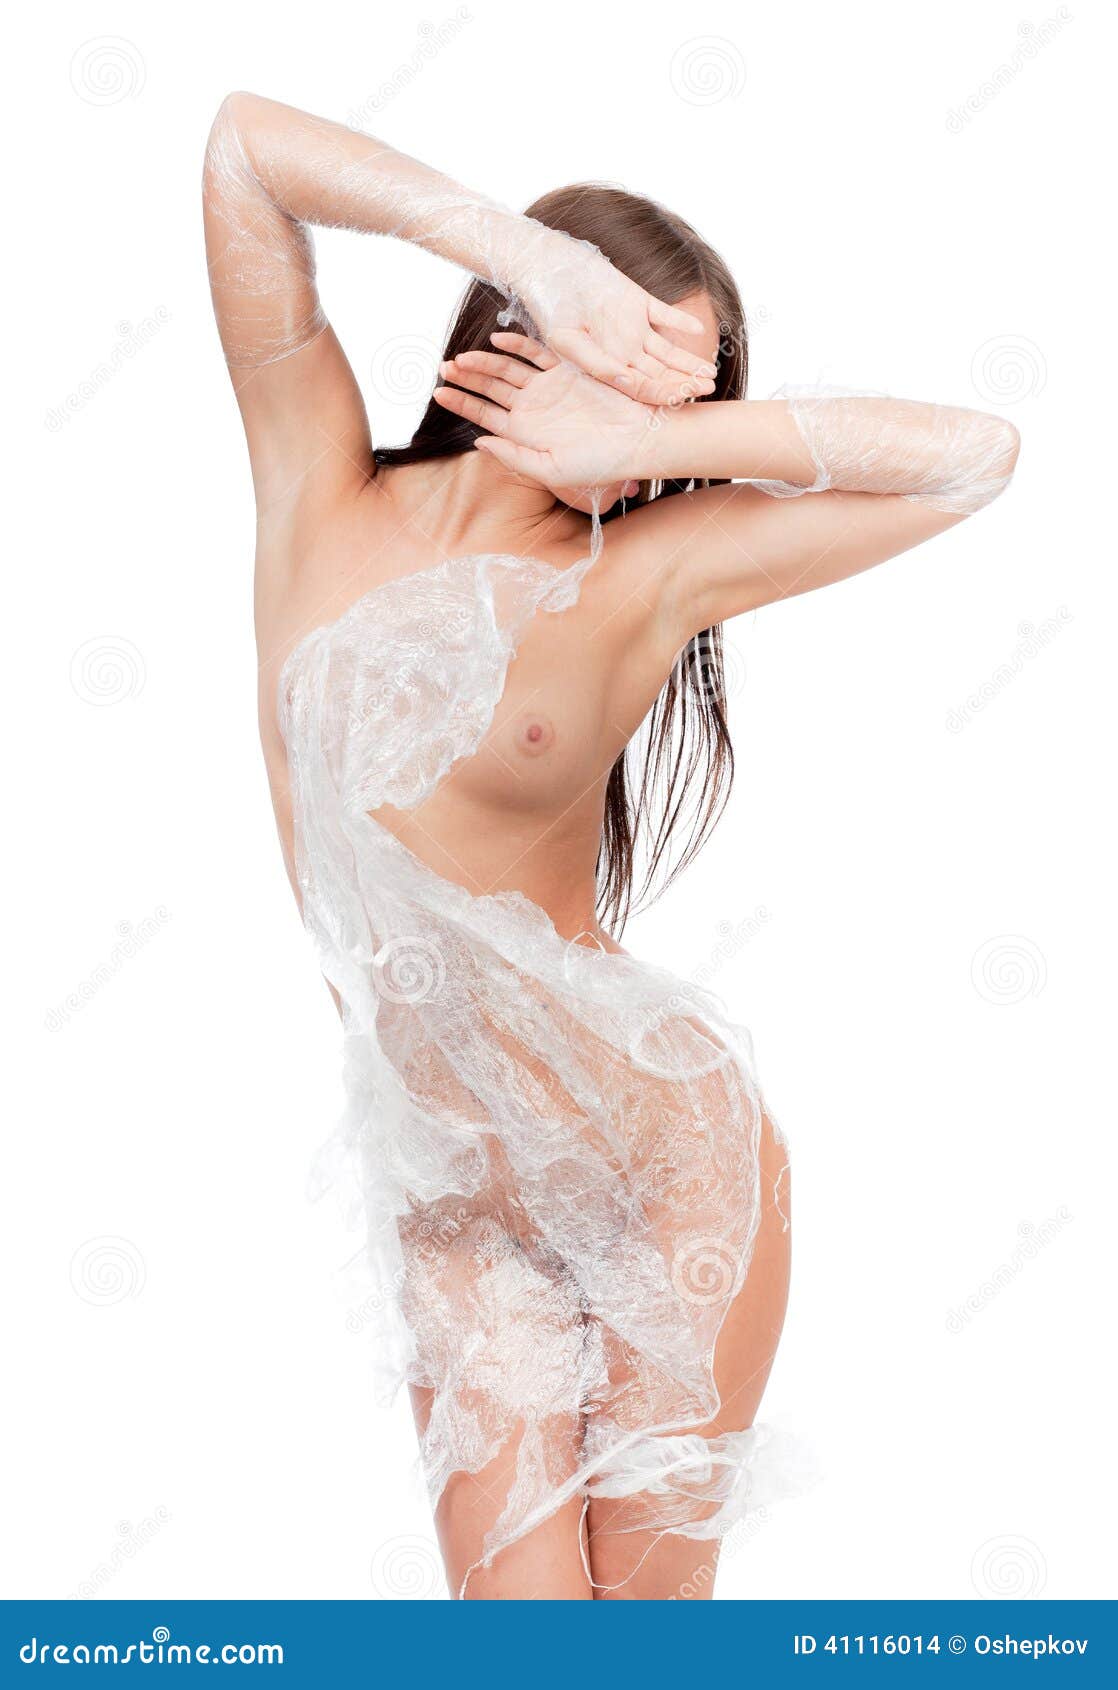 plastic nude wrap girl video gallerie photo